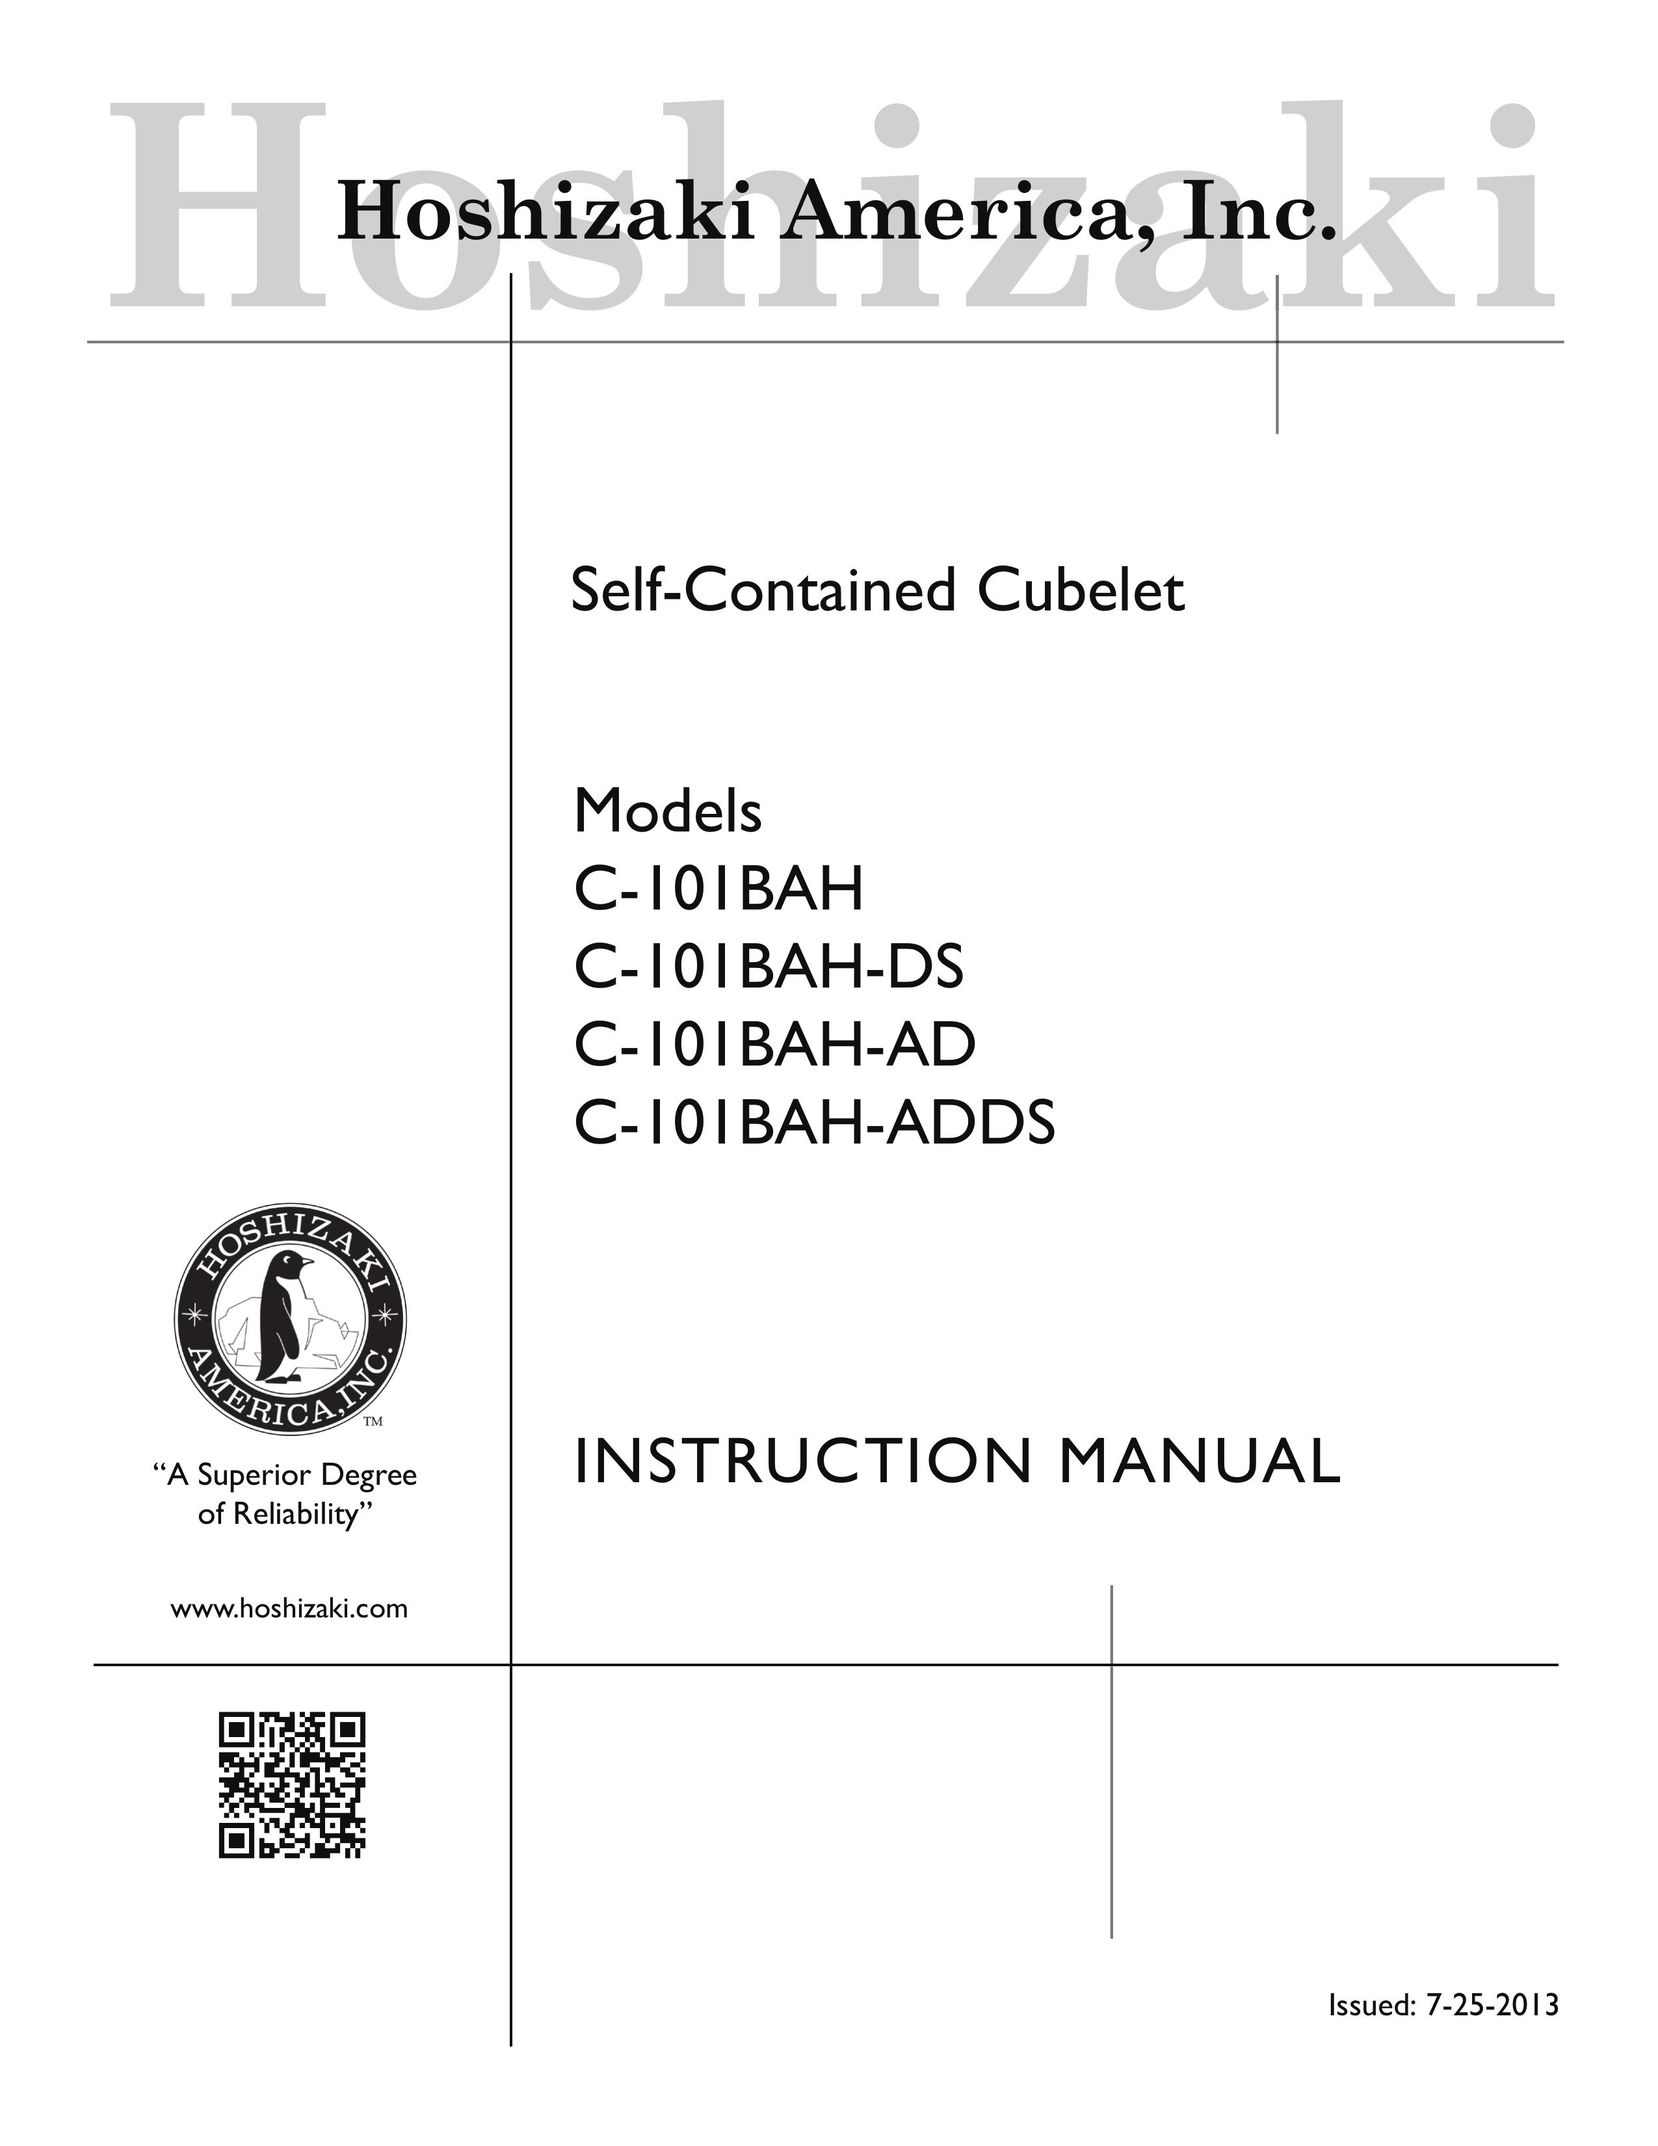 Hoshizaki C-101BAH-ADDS Freezer User Manual